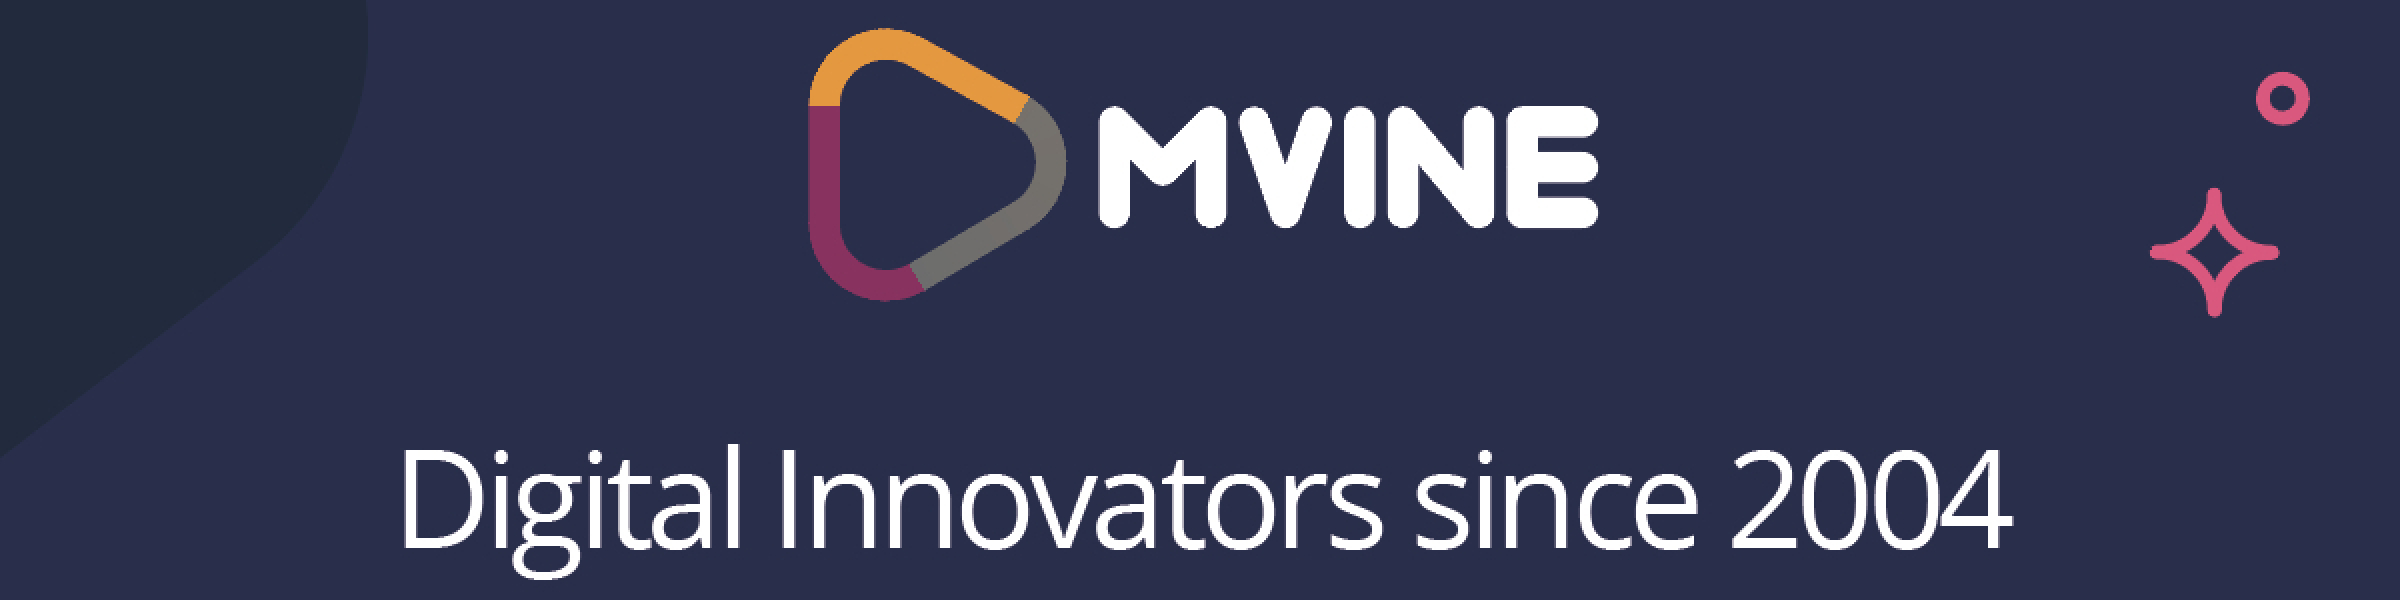 Mvine - Blue background with white writing - Digital innovators since 2004